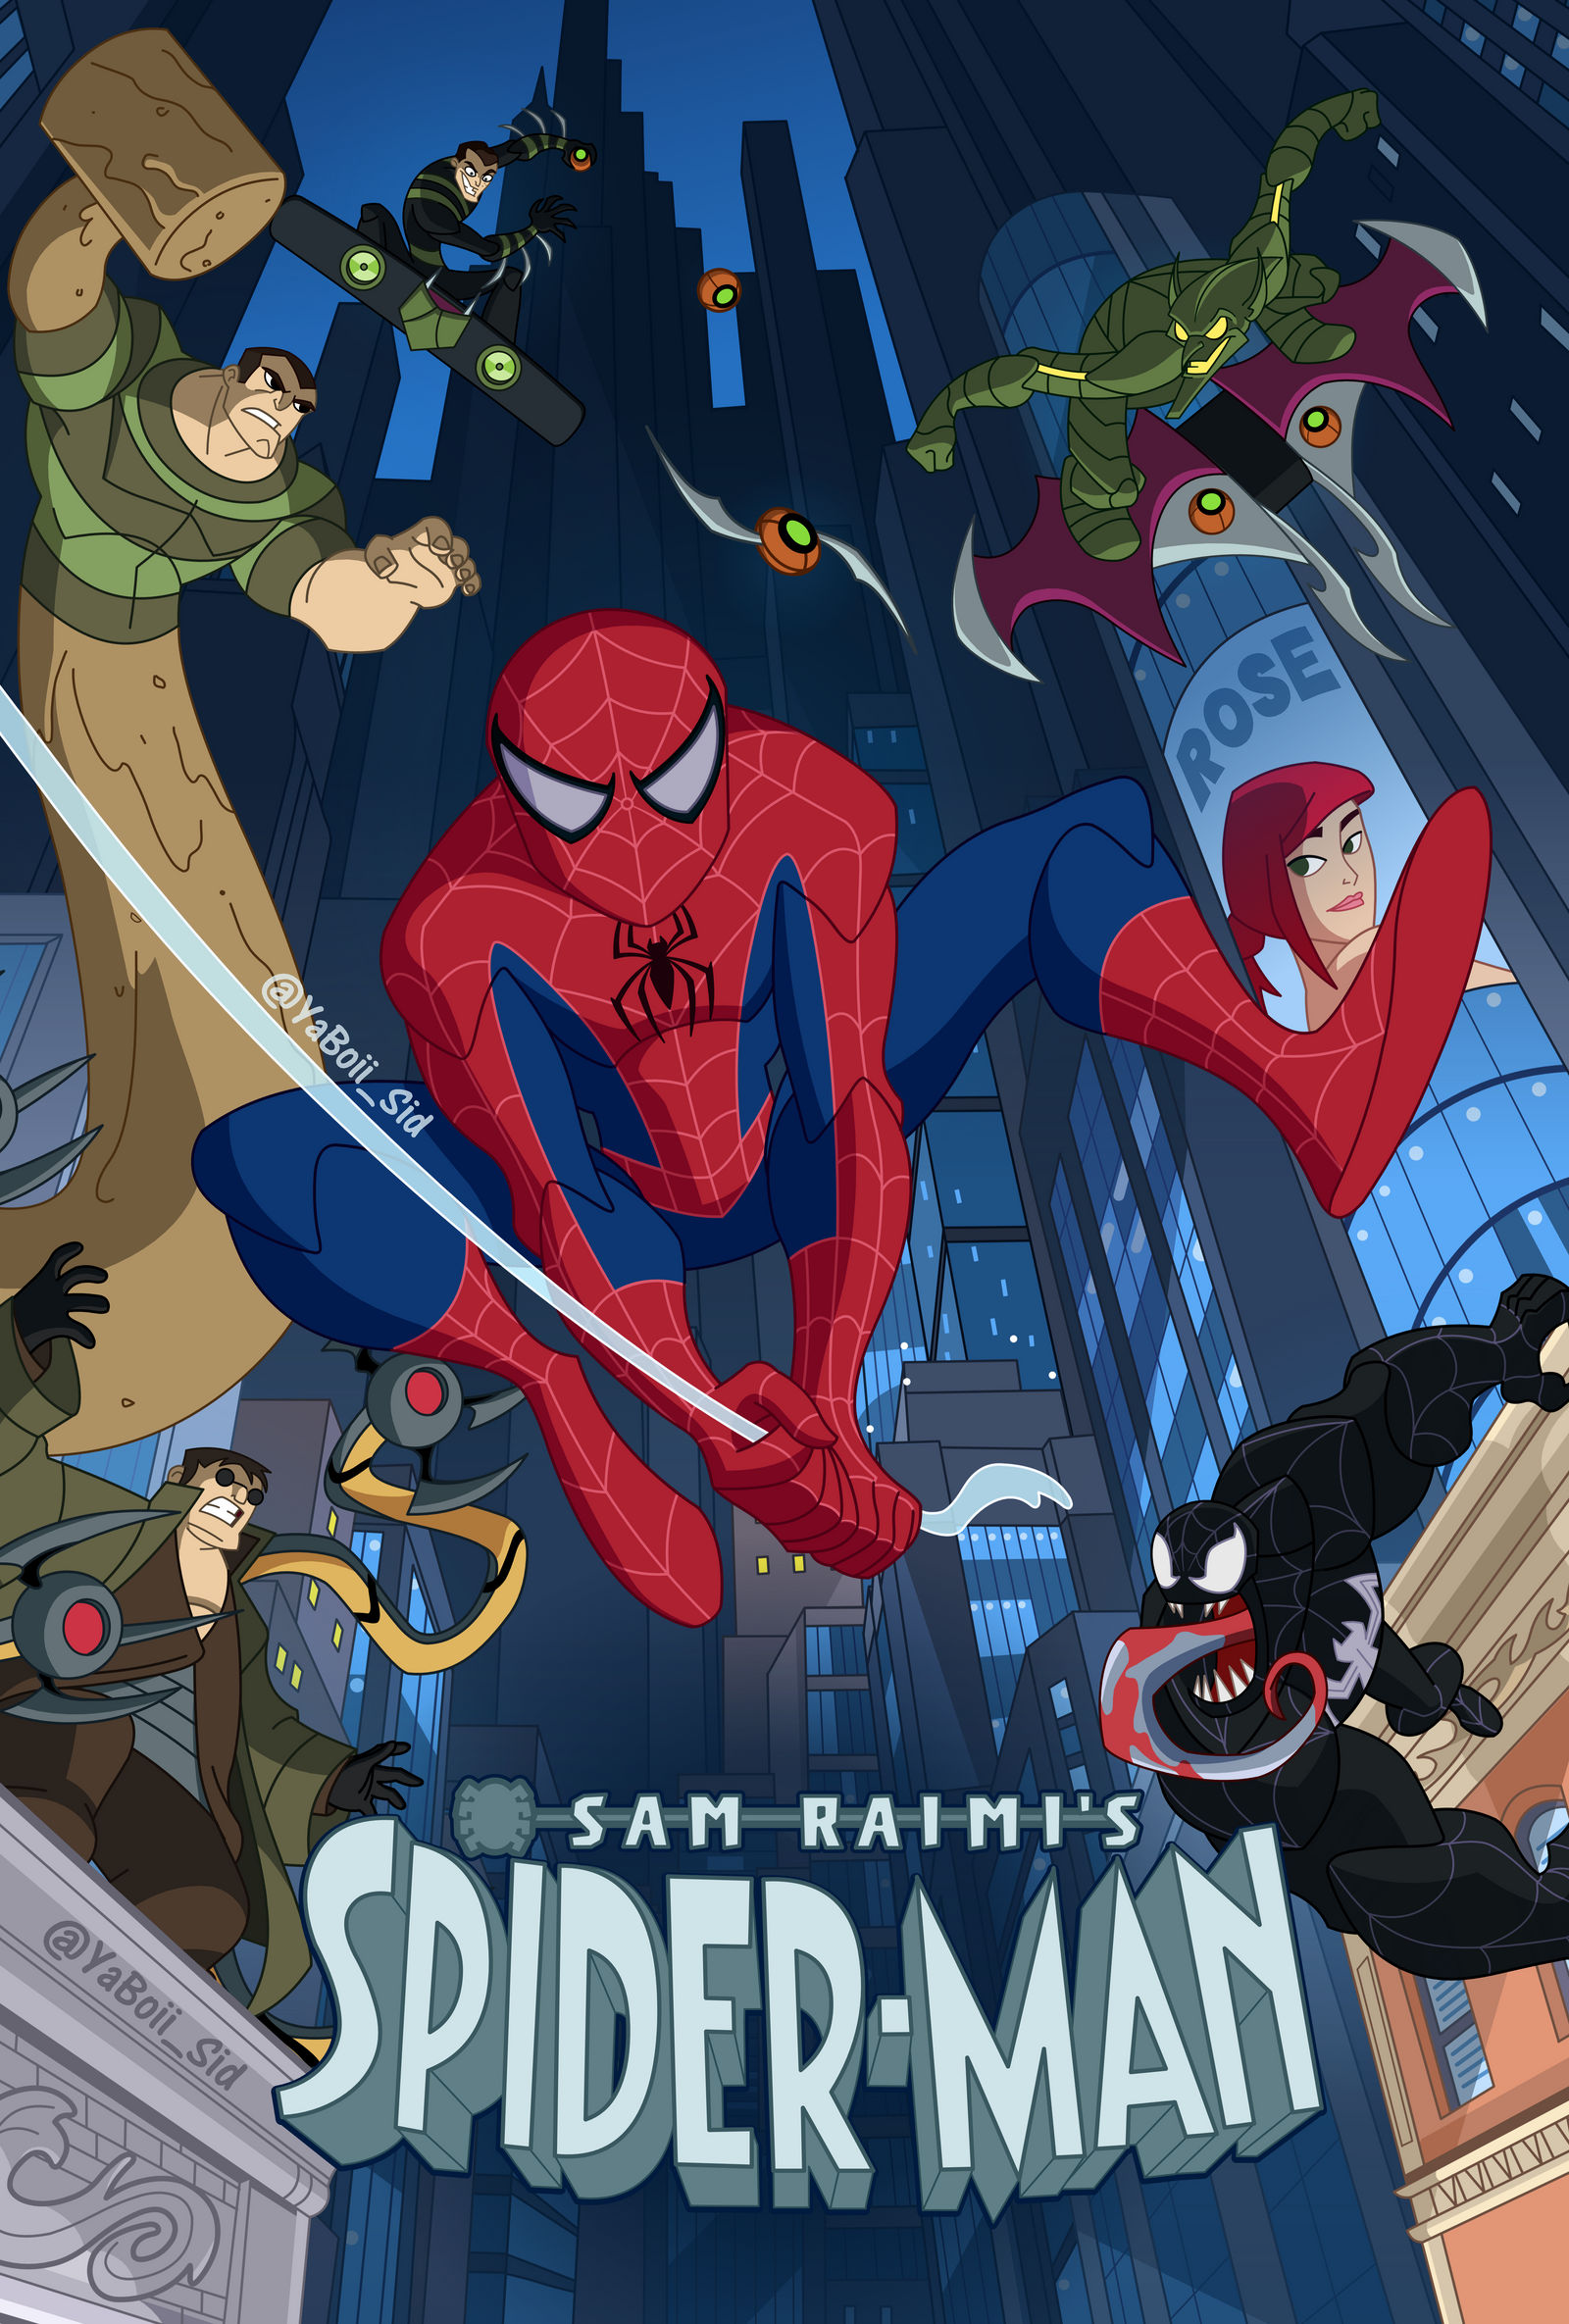 Sam Raimi's Spectacular Spider-Man by YaBoiiSid on DeviantArt